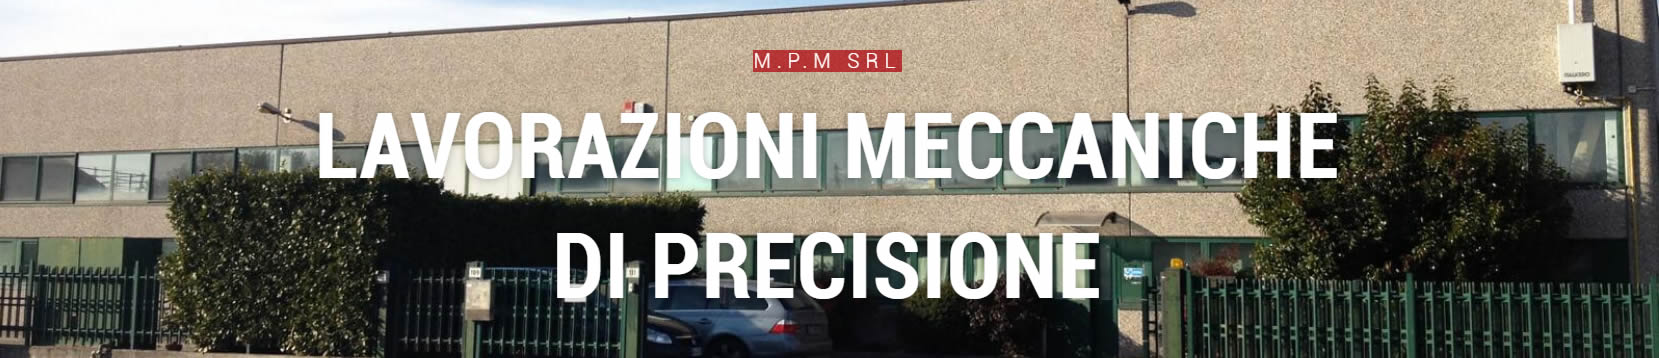 Officina meccanica di precisione Malnate MPM srl